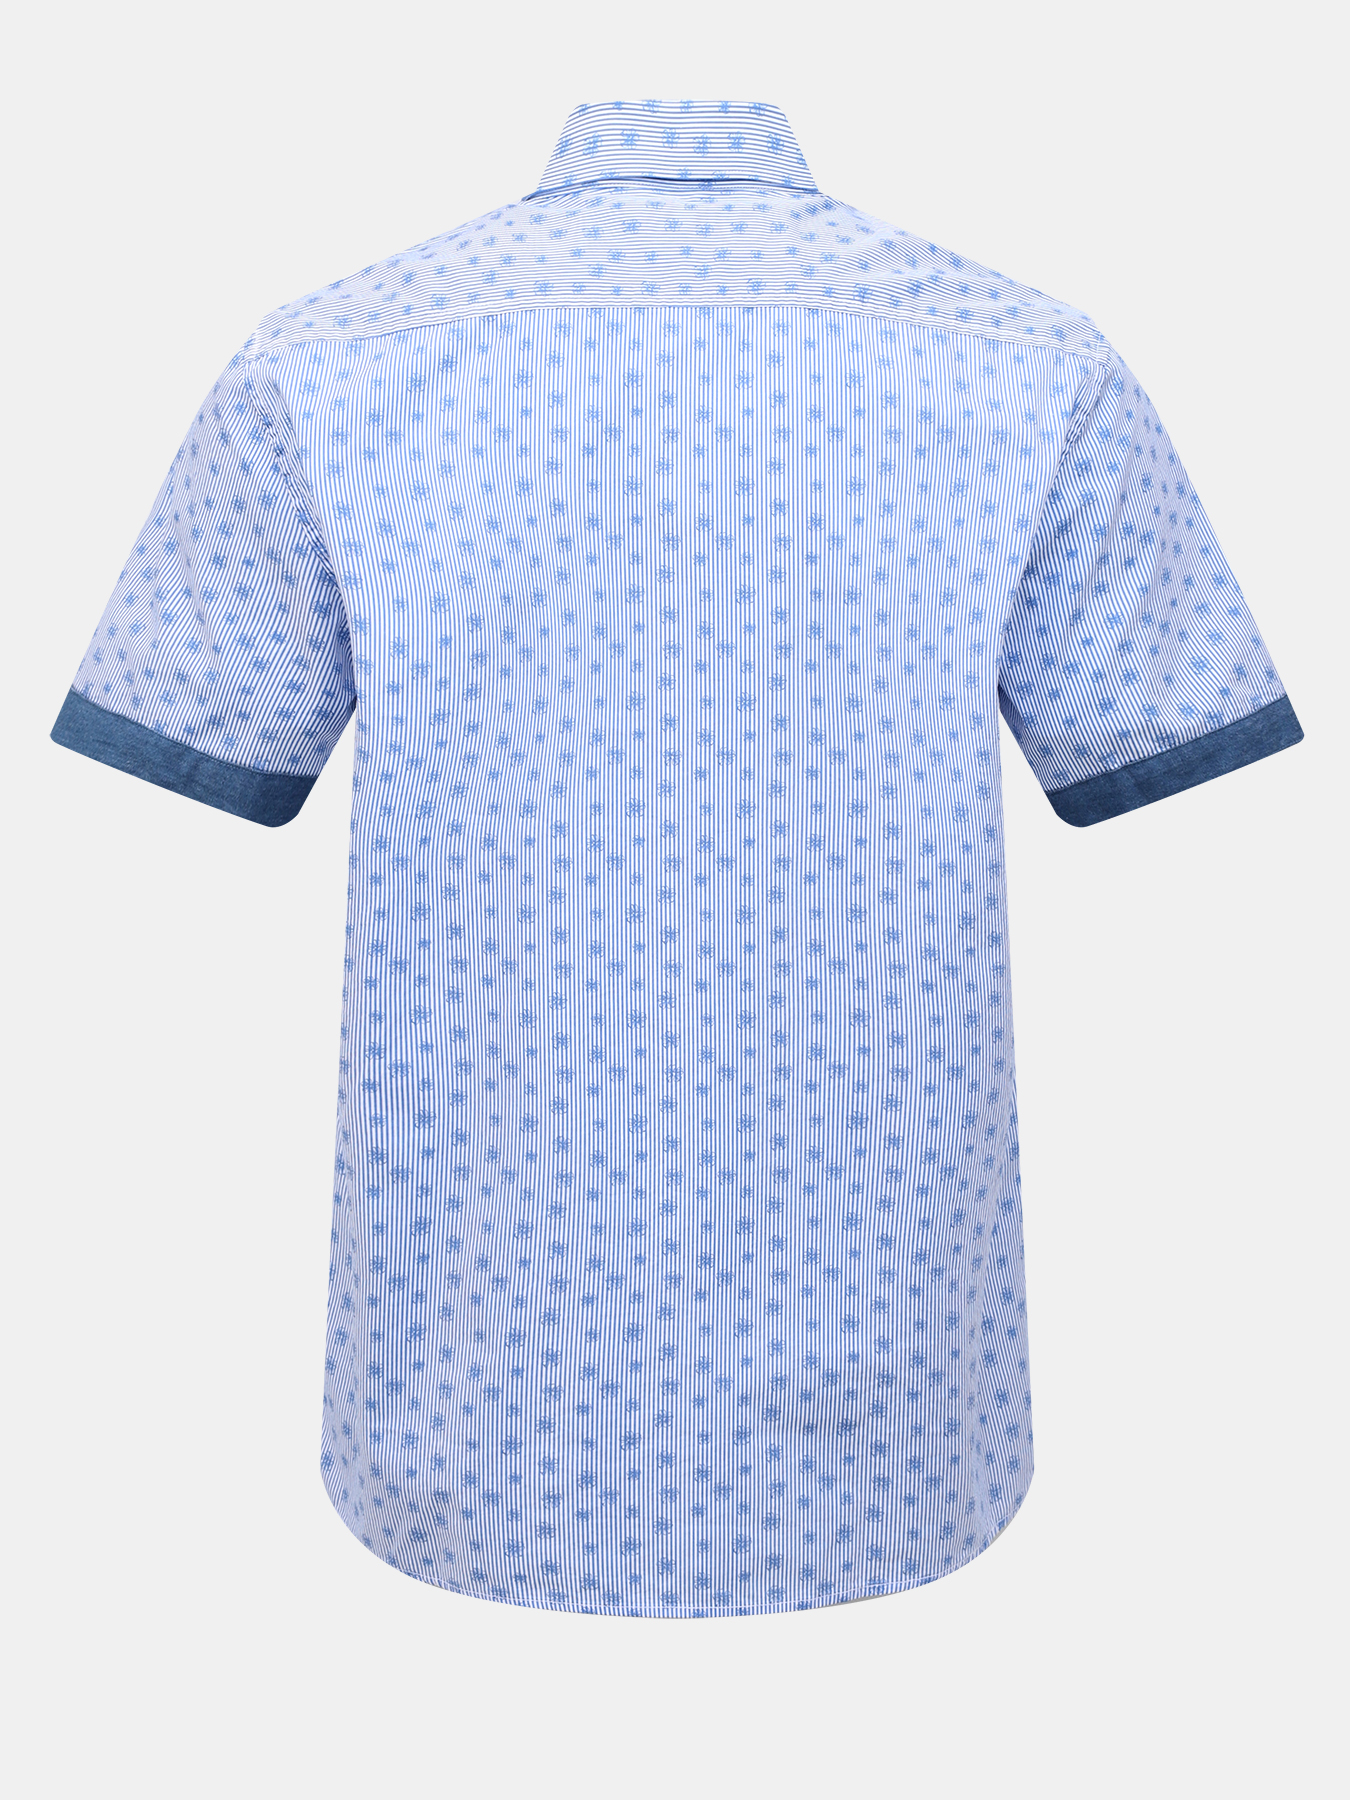 Рубашка Ritter Jeans 373501-026, цвет голубой, размер 50 - фото 2